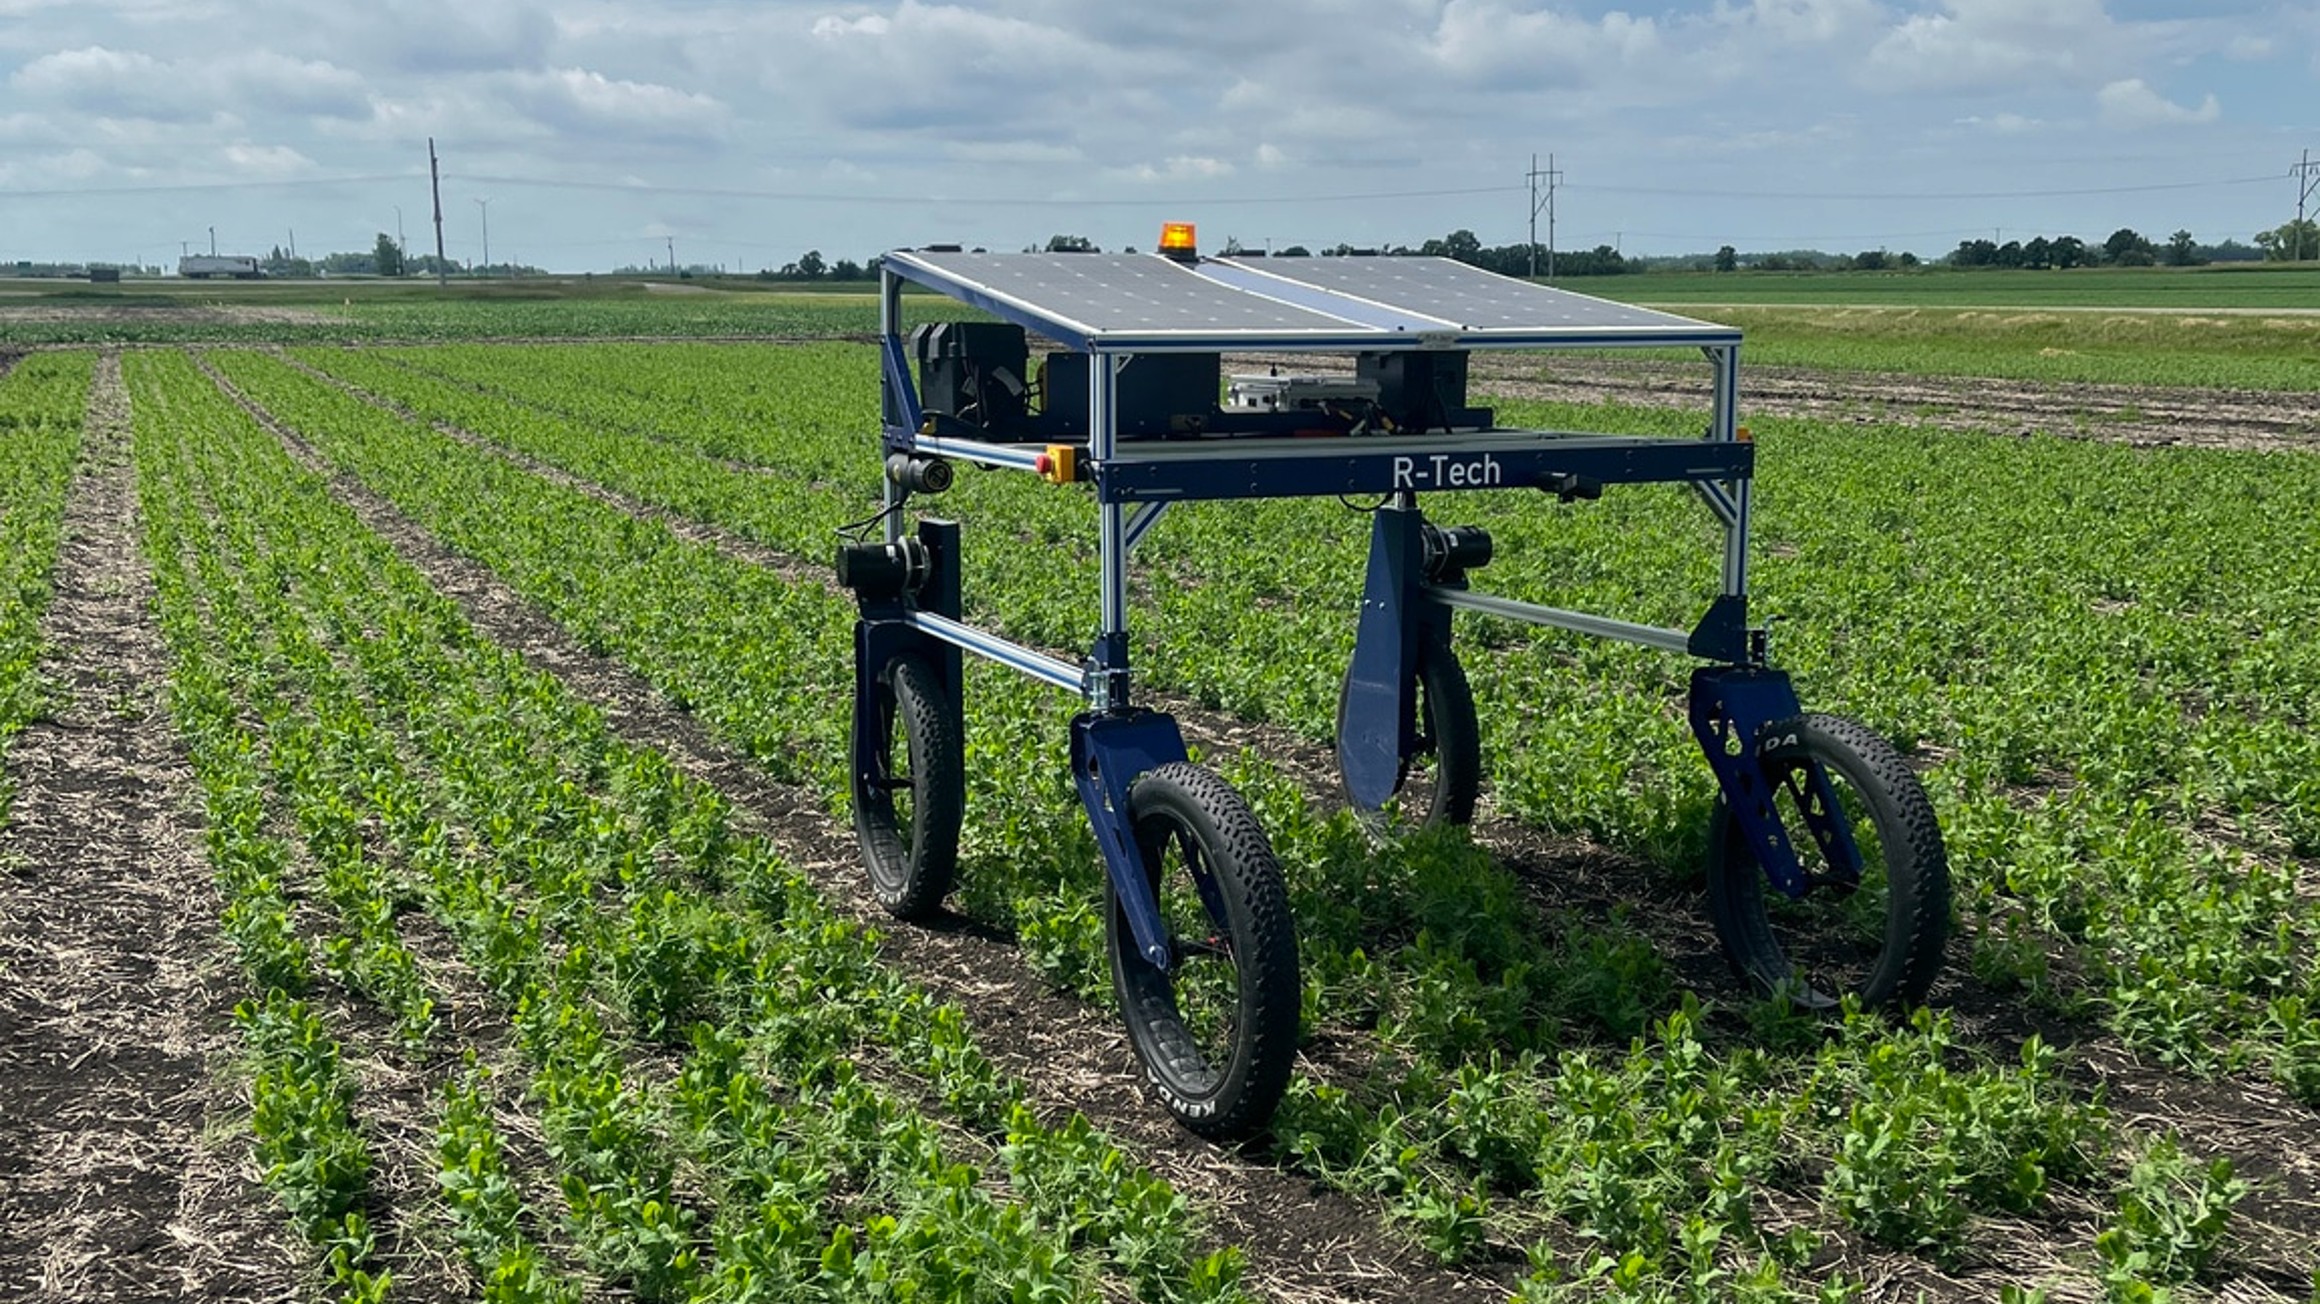 R-Tech rover in a crop field